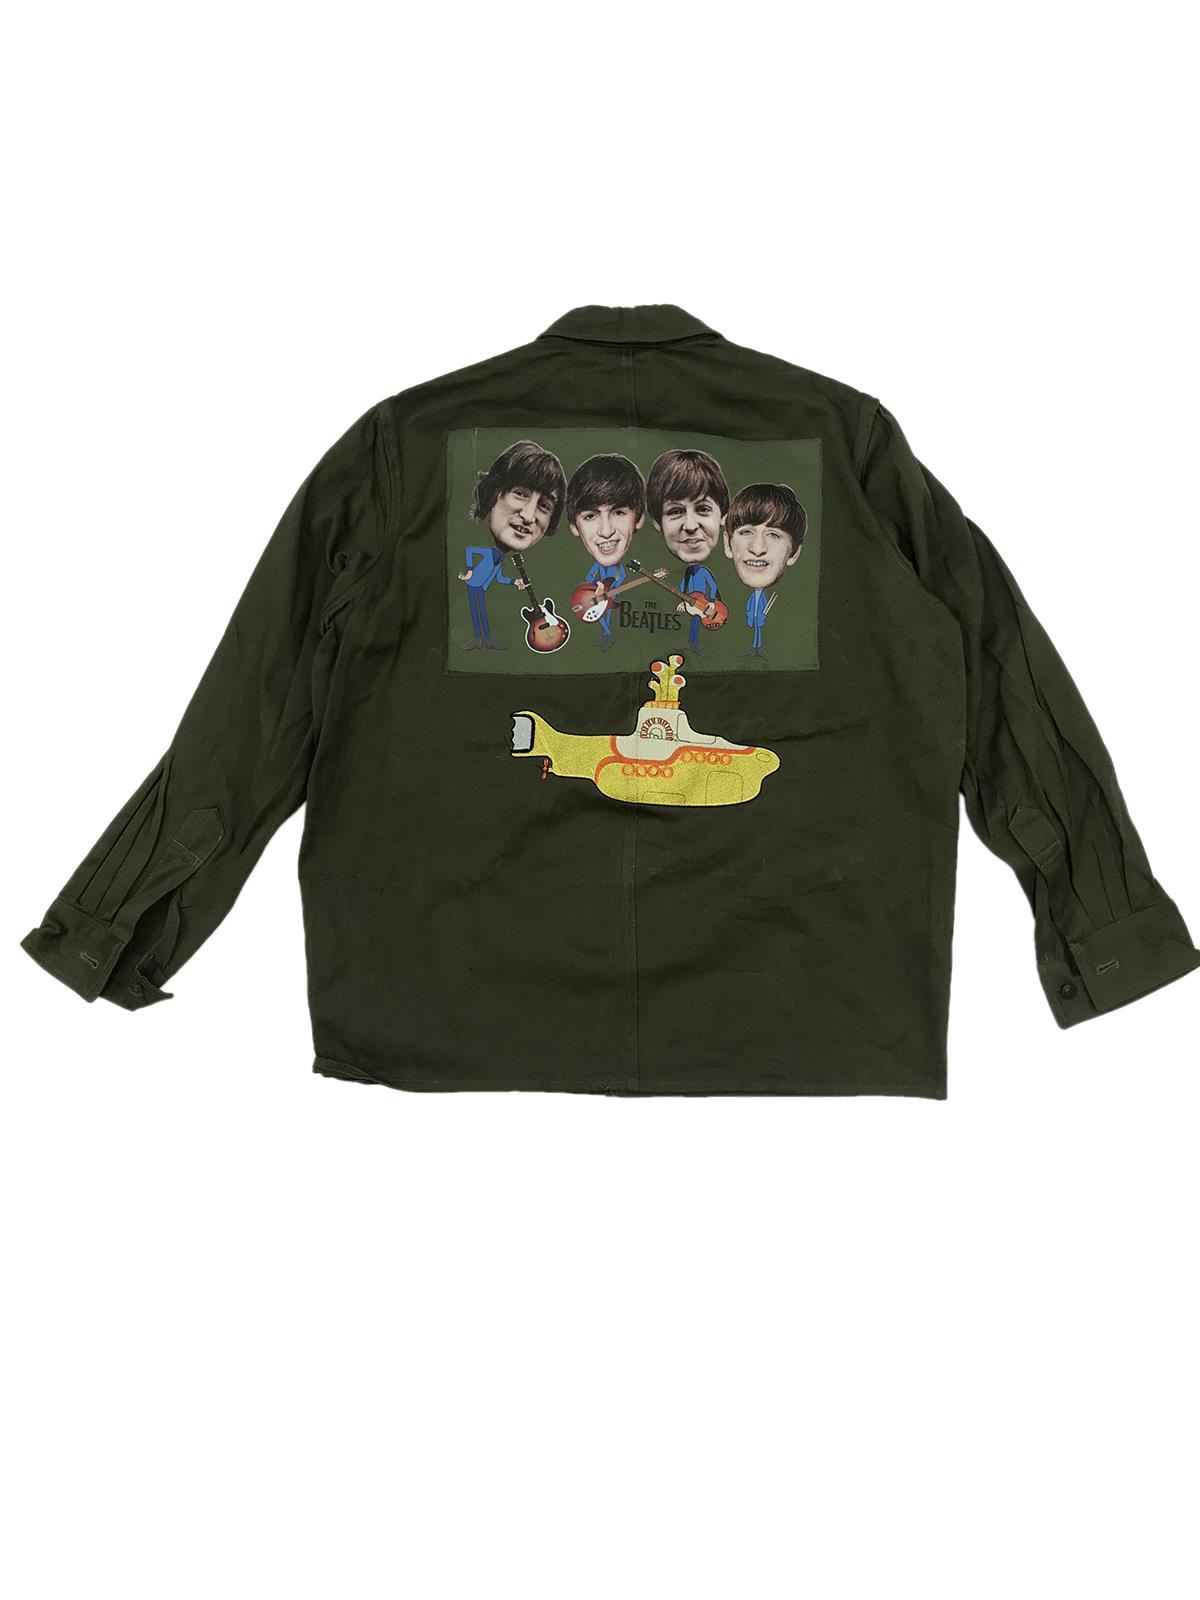 GIGOLÉ RELAB Beatles Yellow Submarine Shirt